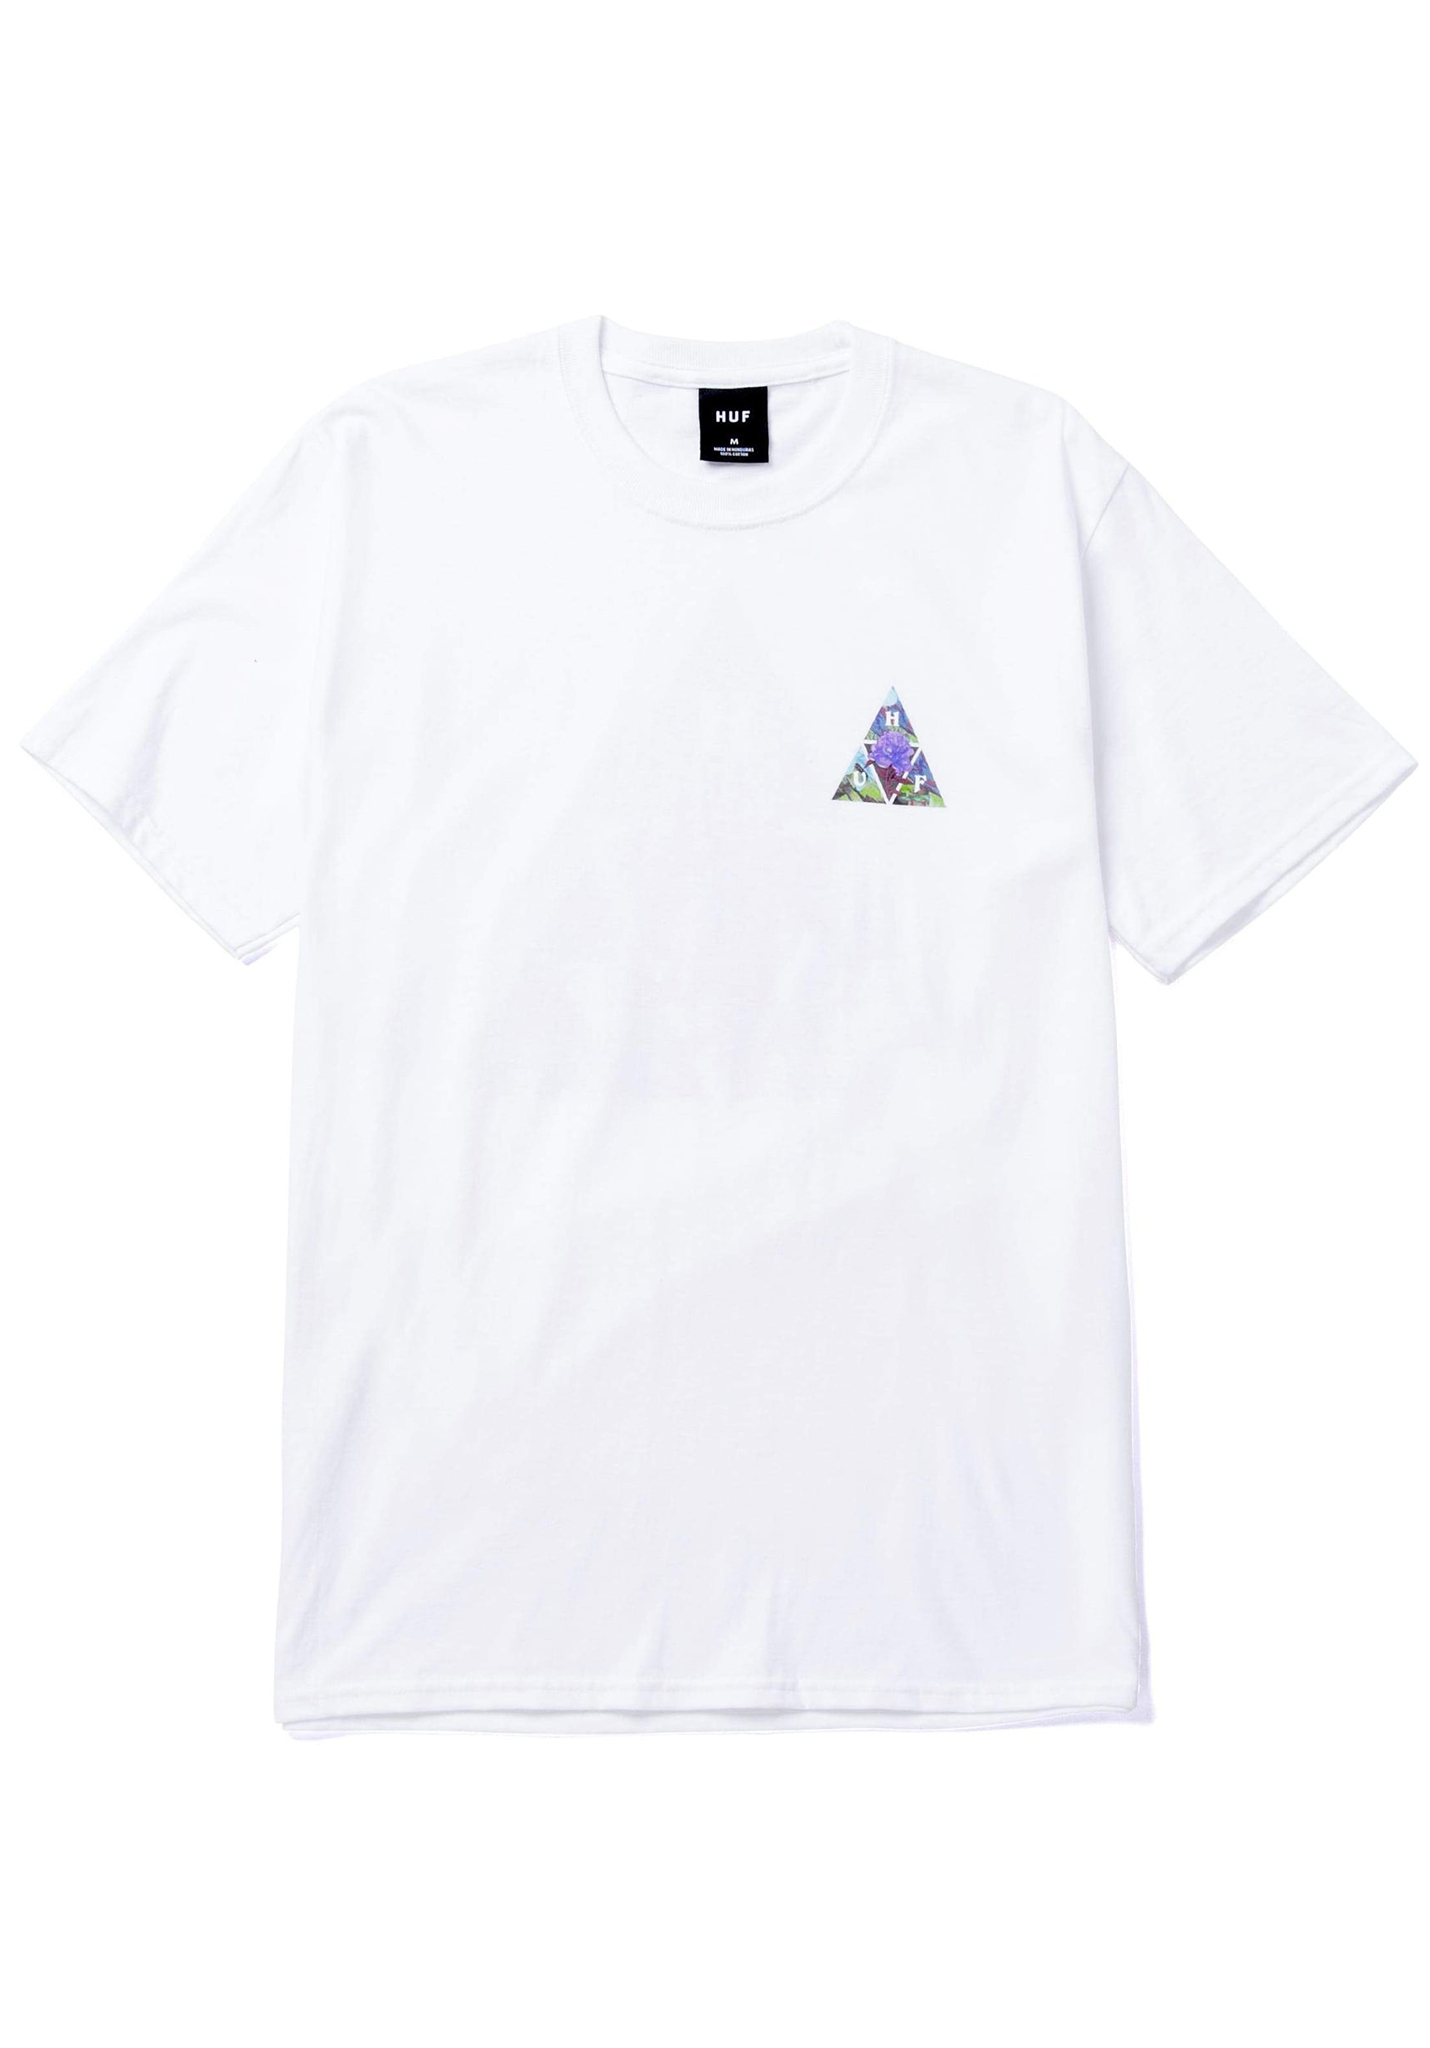 HUF New Dawn Triple Triangle T-Shirt white L